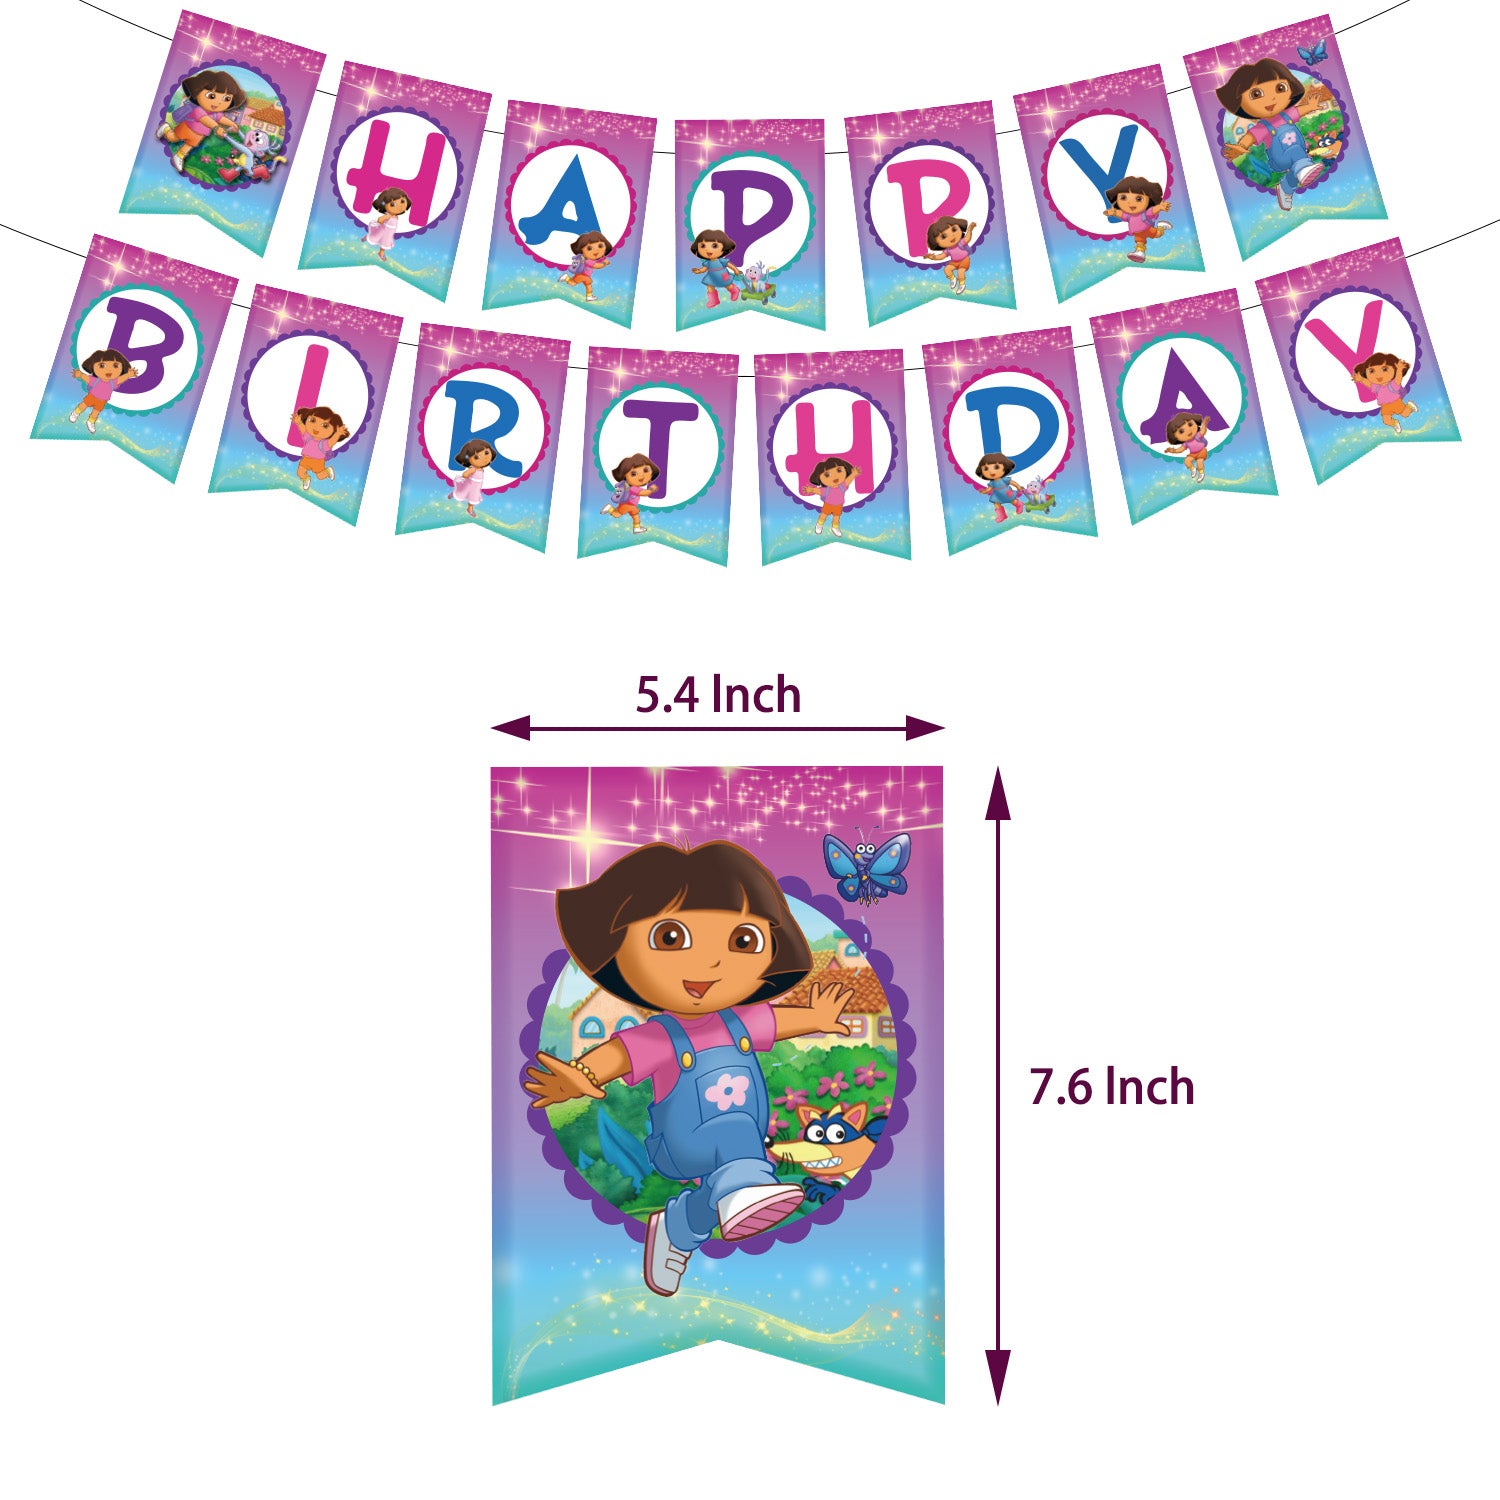 Dora the Explorer Birthday Party Decorations.